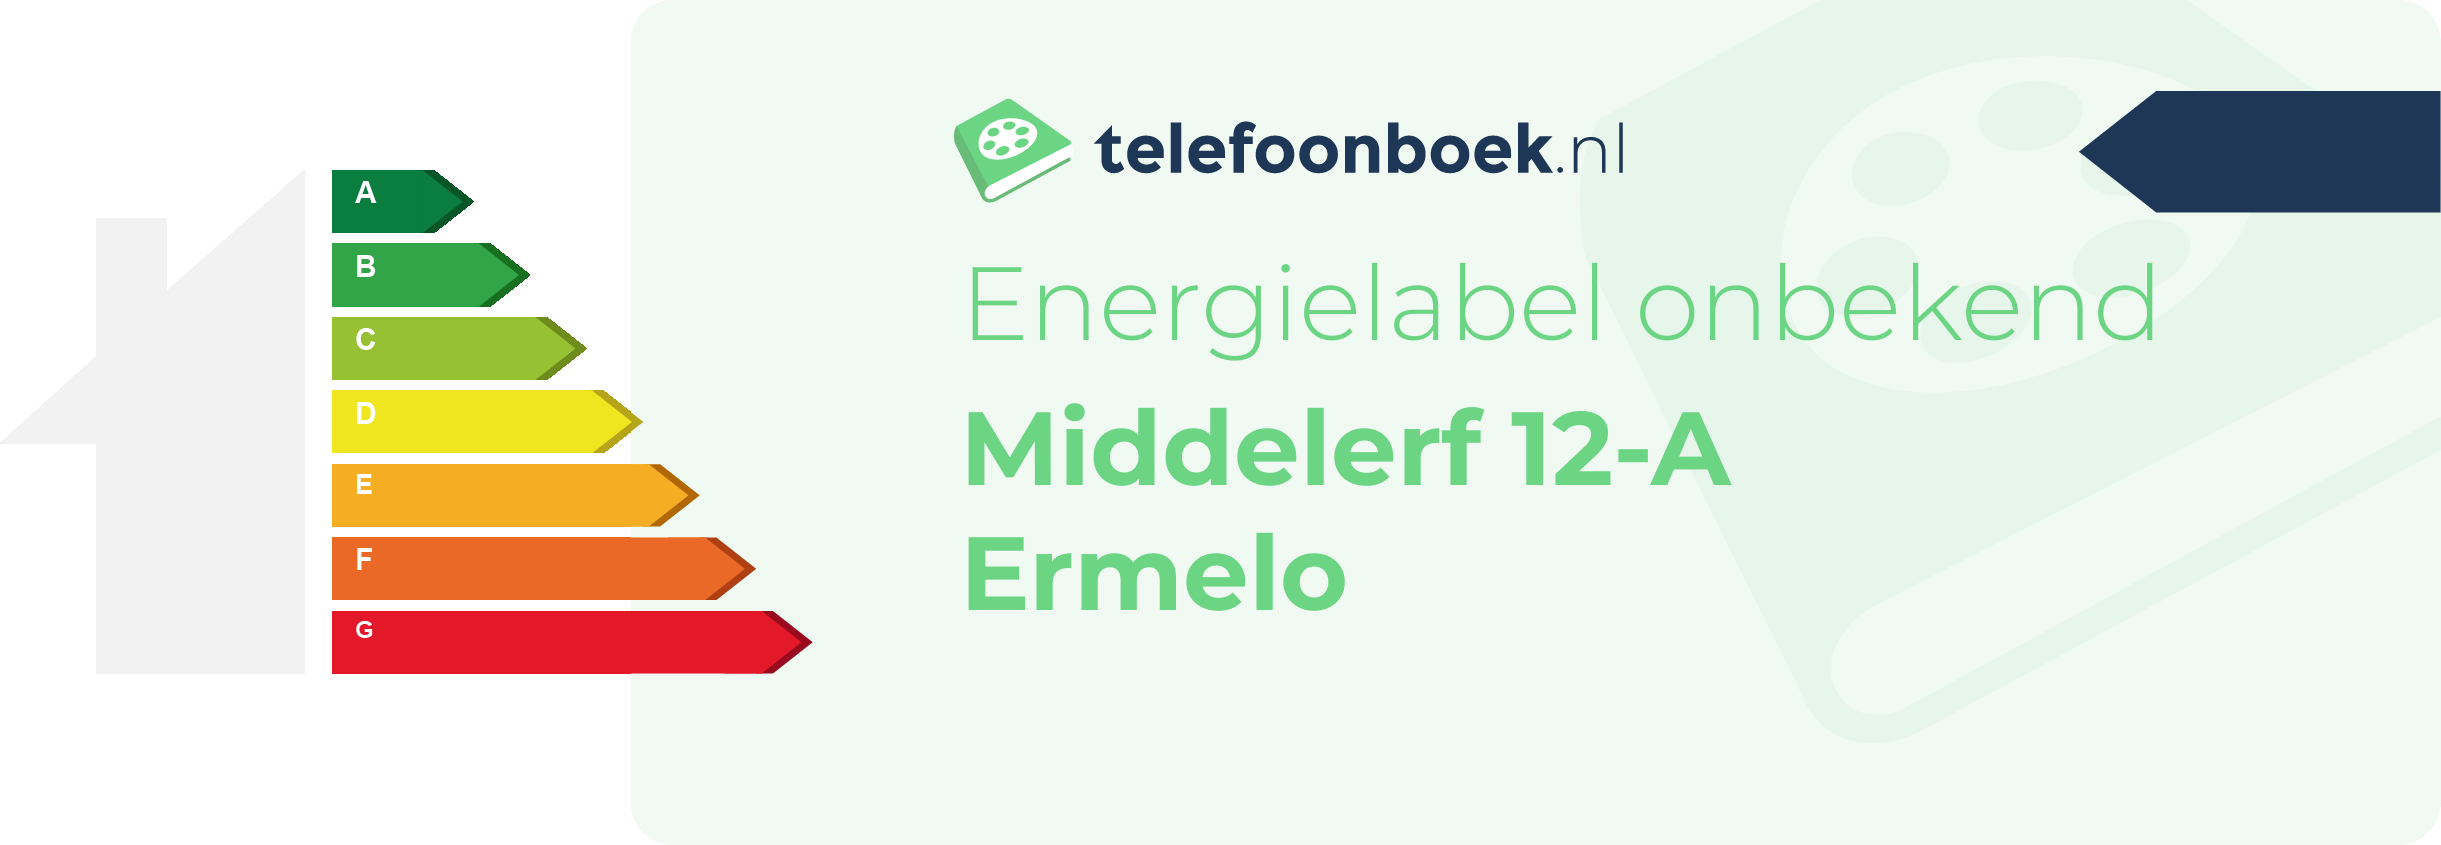 Energielabel Middelerf 12-A Ermelo